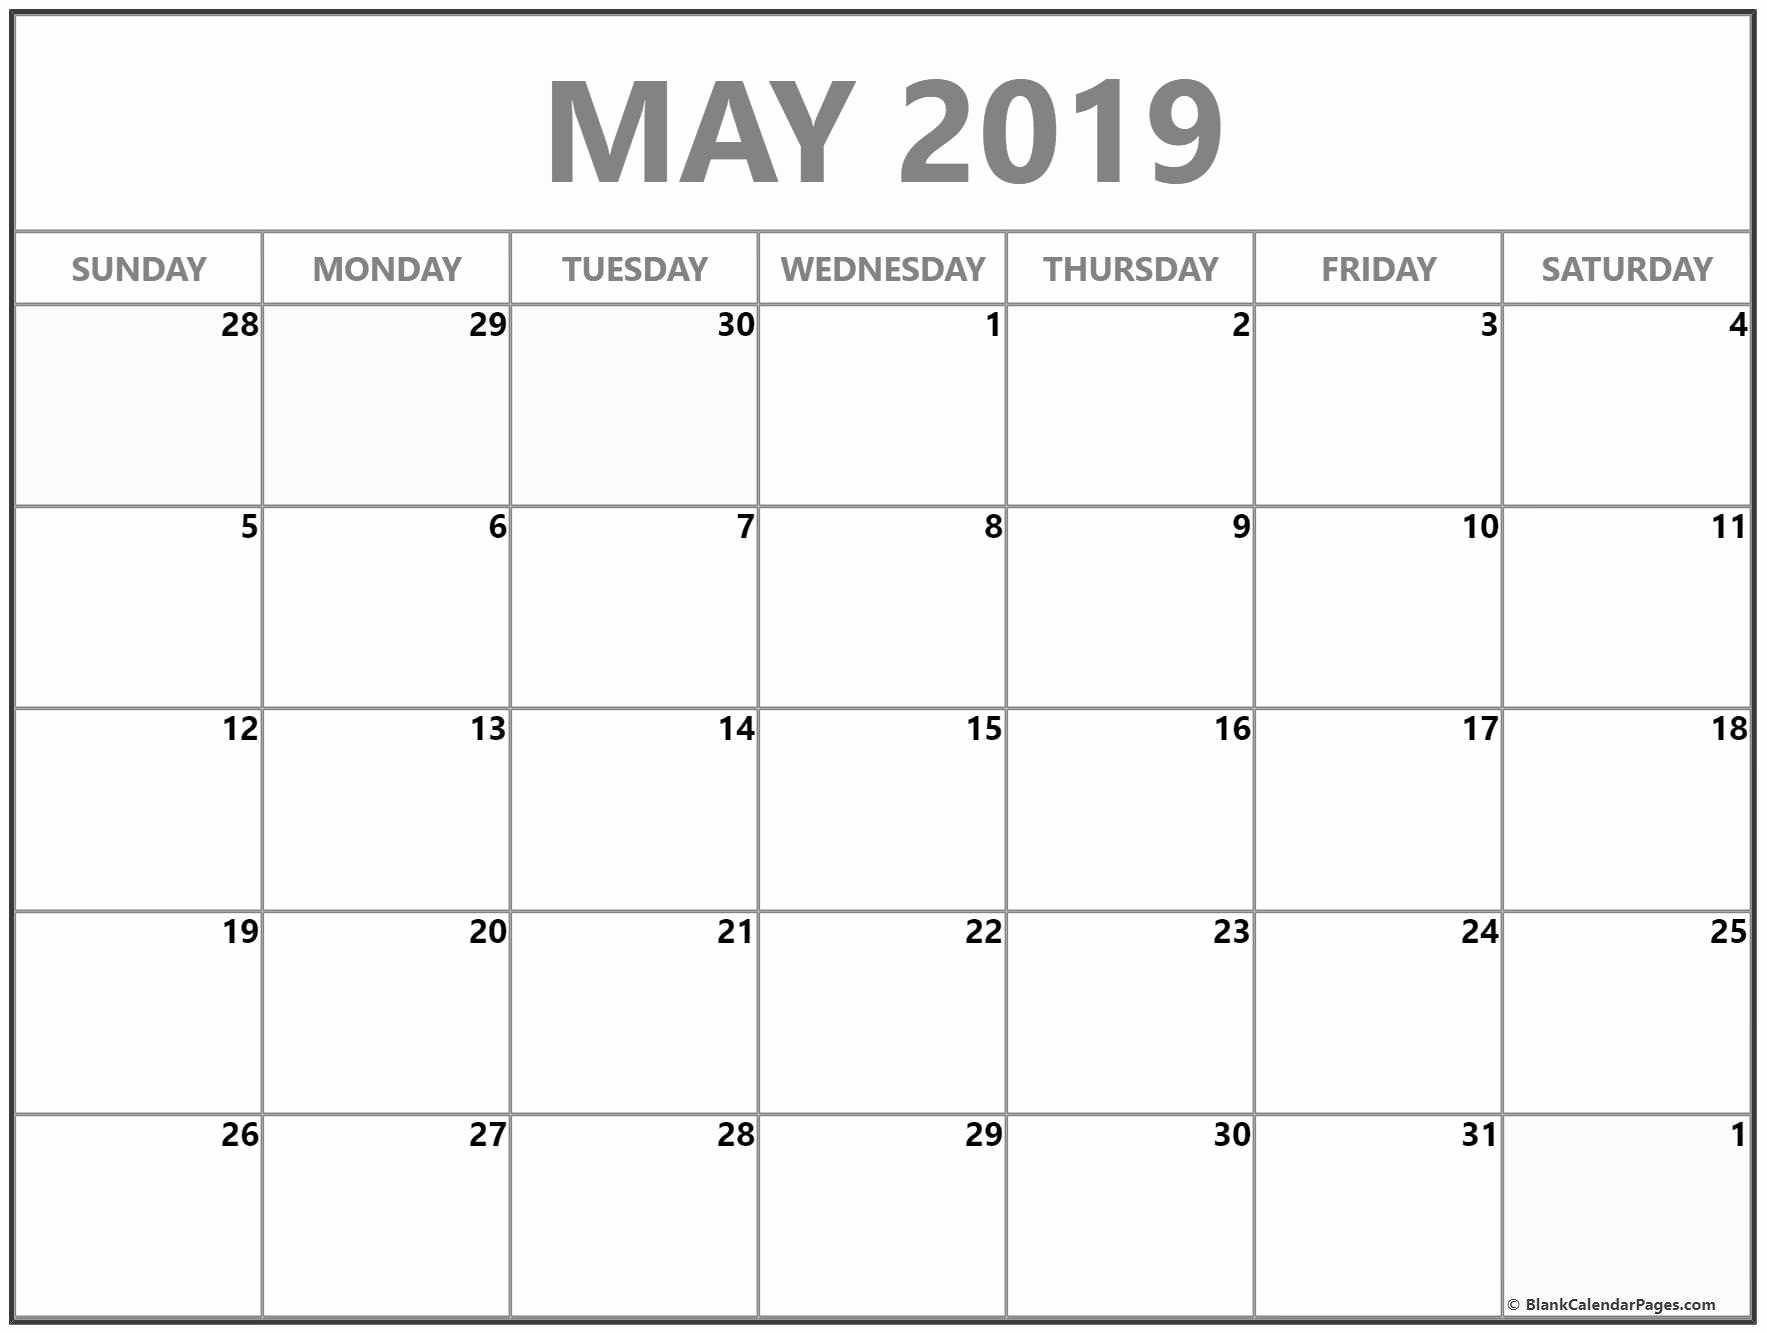 Blank Calendar Template 2019 Inspirational May 2019 Blank Calendar Templates